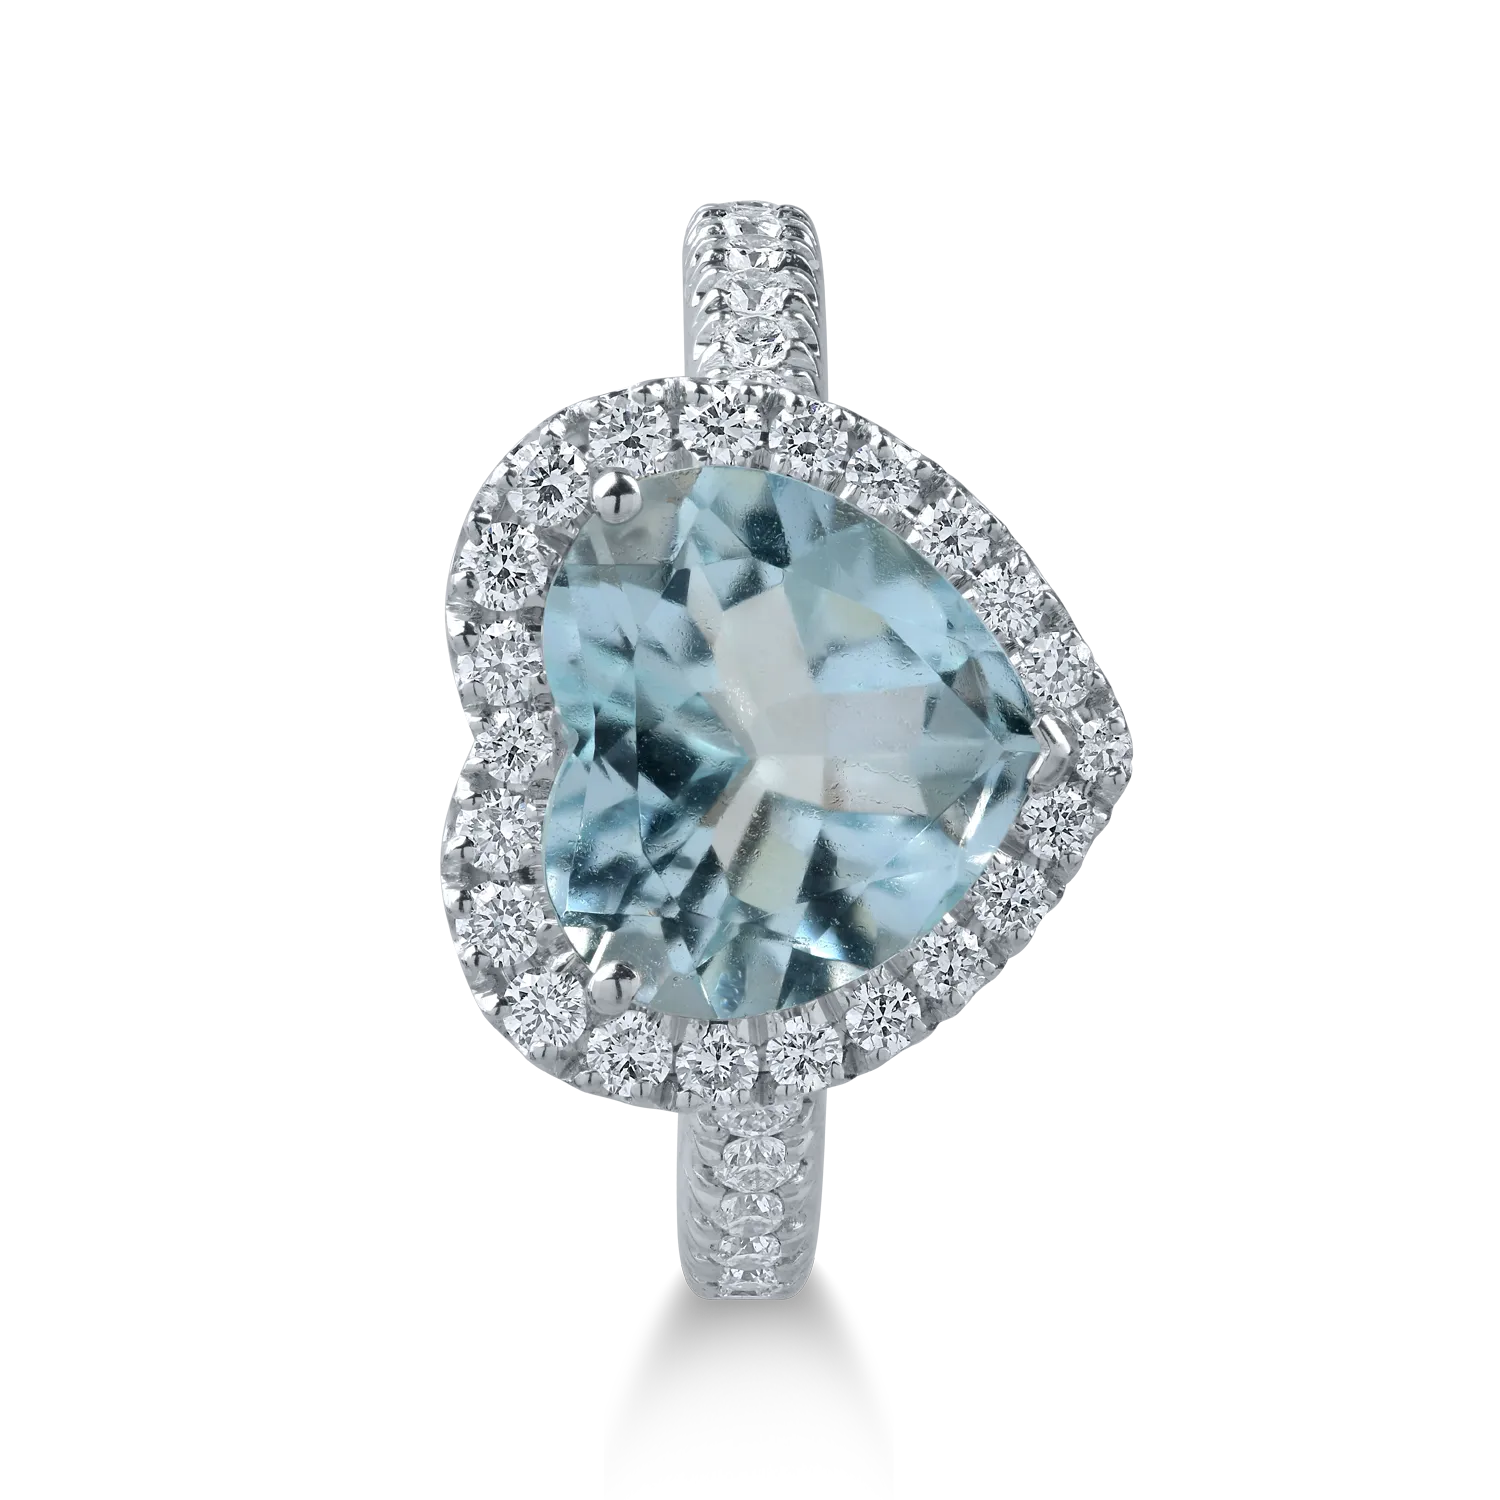 White gold heart ring with 2.38ct aquamarine and 0.48ct diamonds